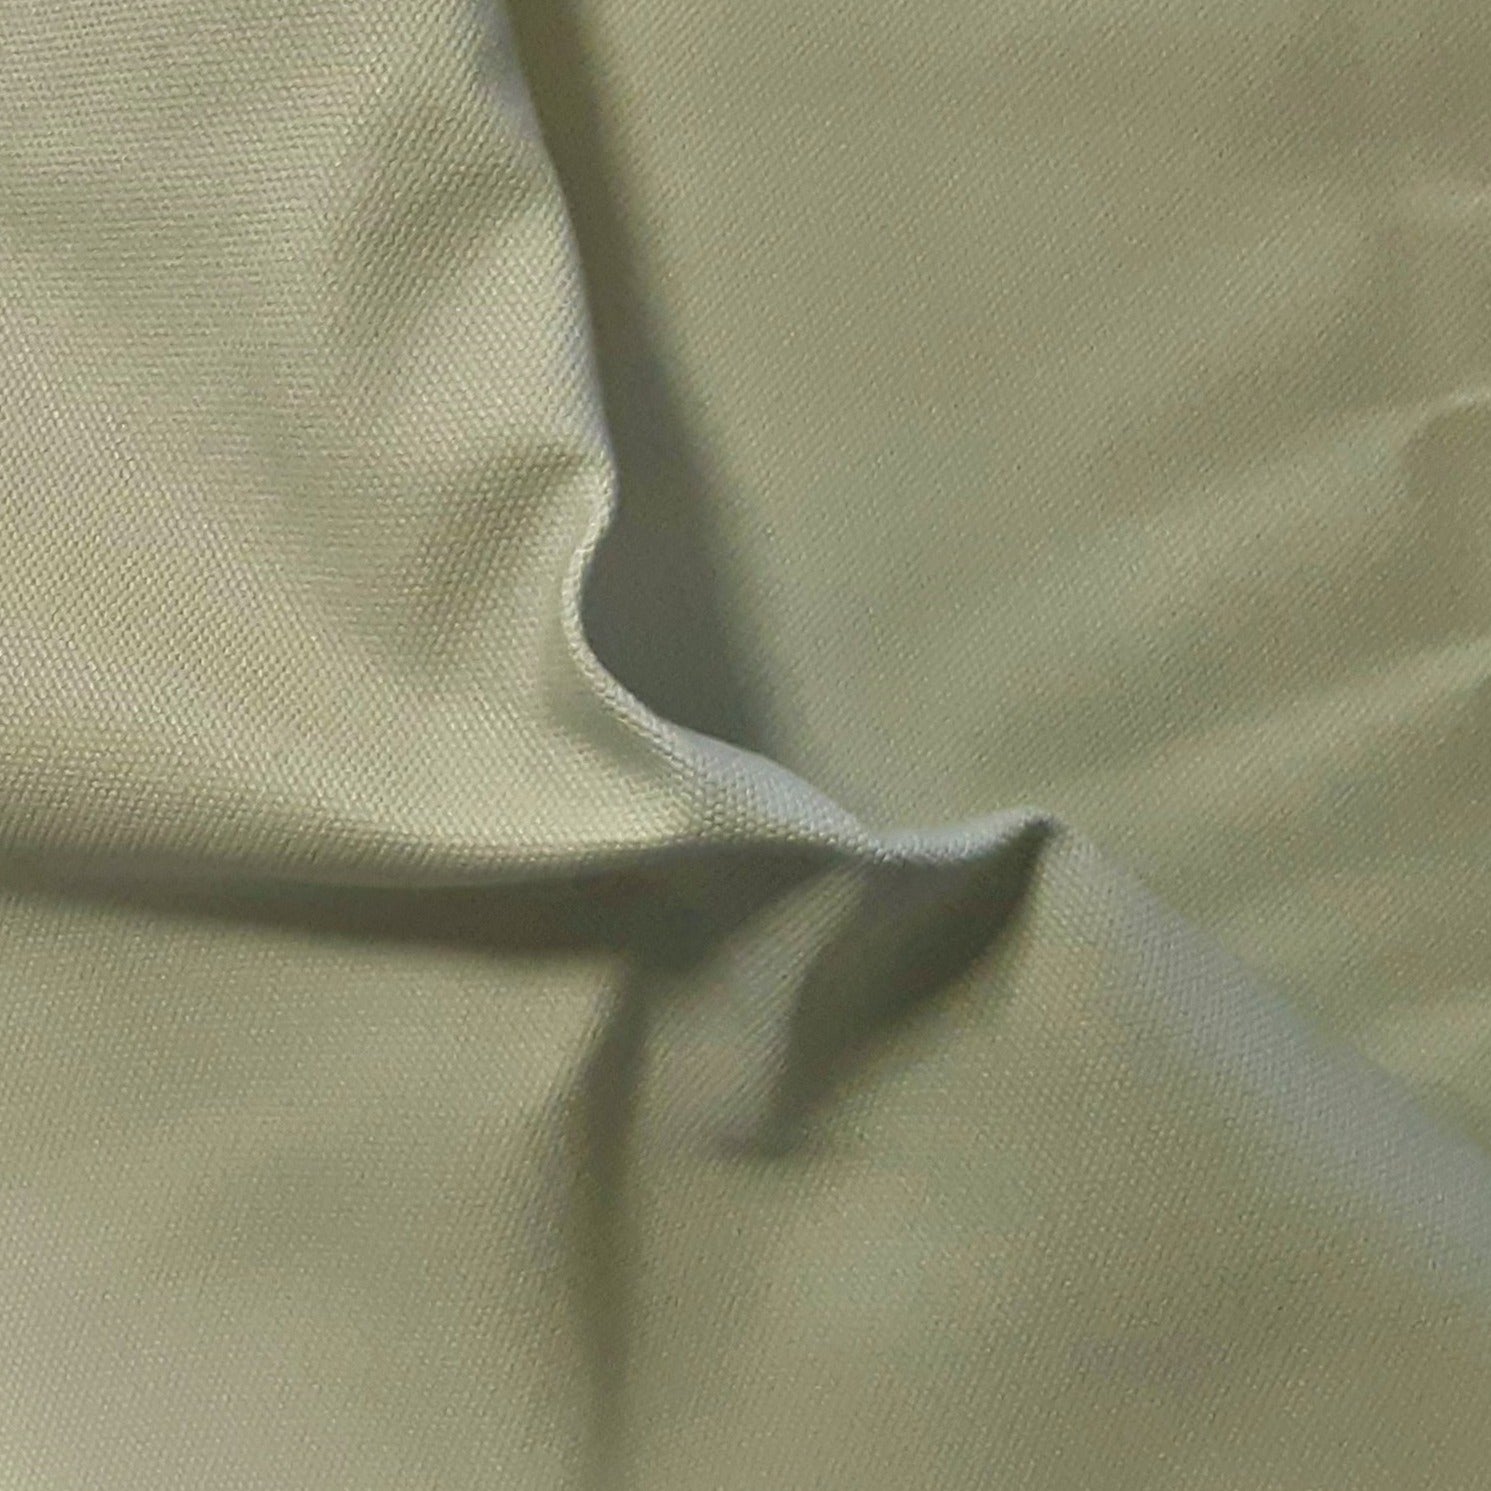 Mint #S 12 Ounce Canvas Duck Woven Fabric - SKU 6695